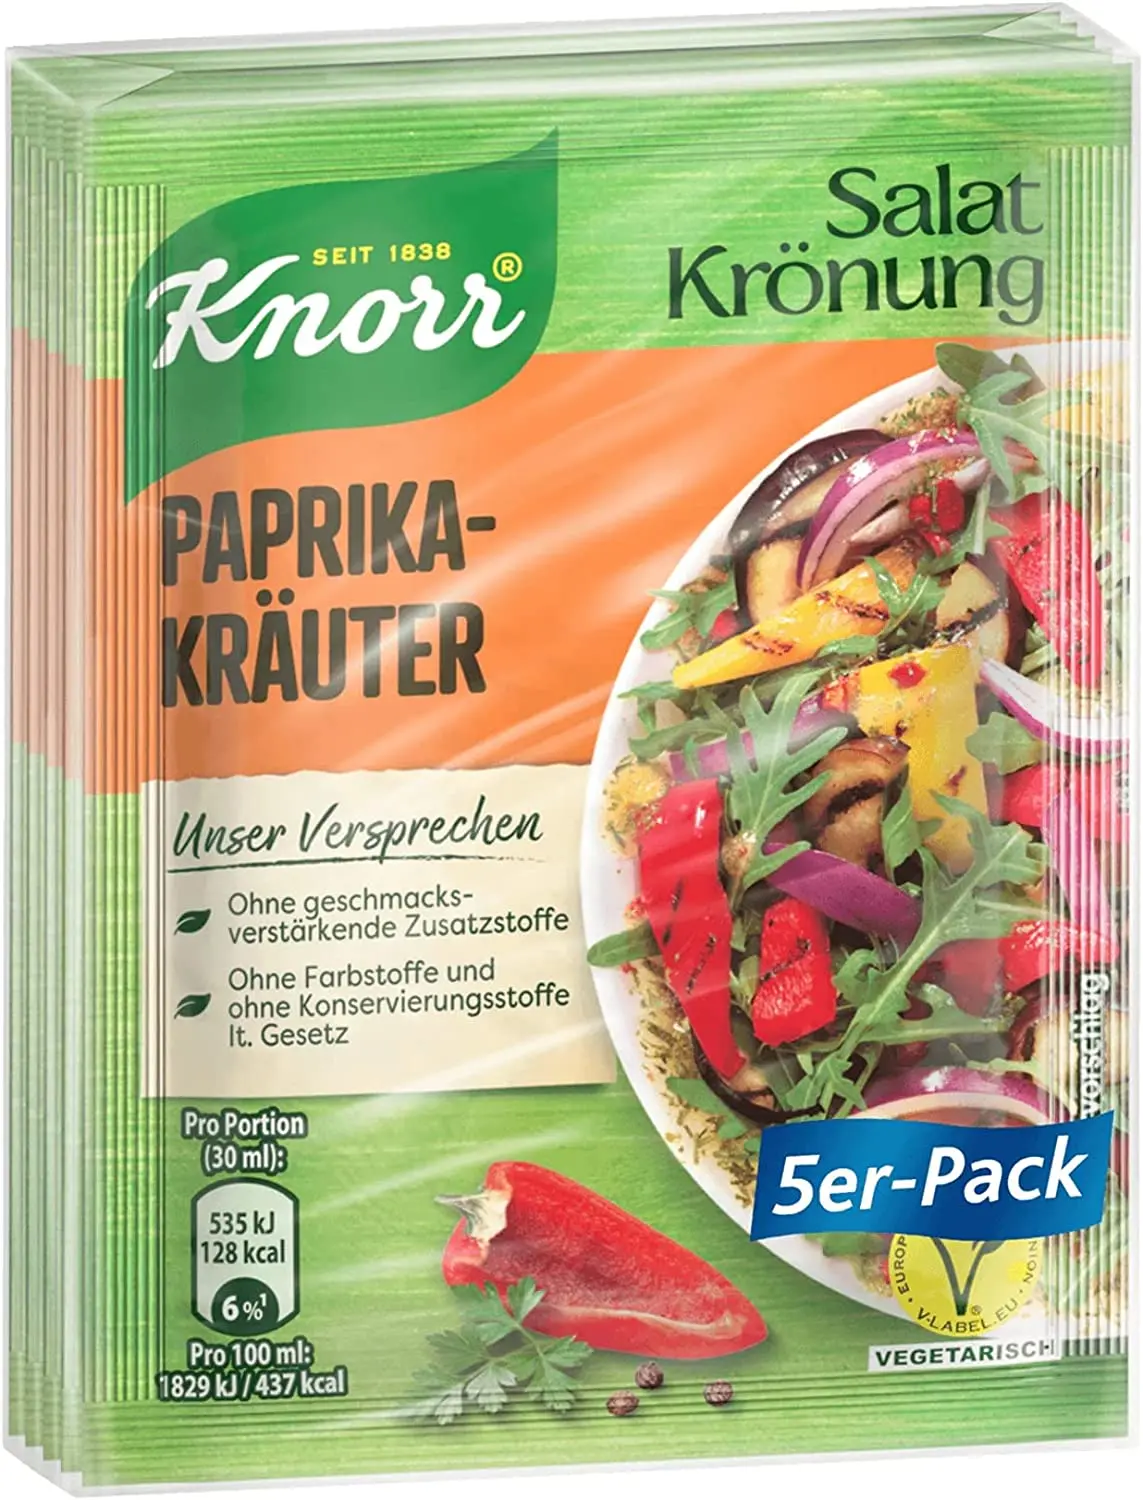 Knorr Salat Kronung Paprika-Krauter 5pk.*